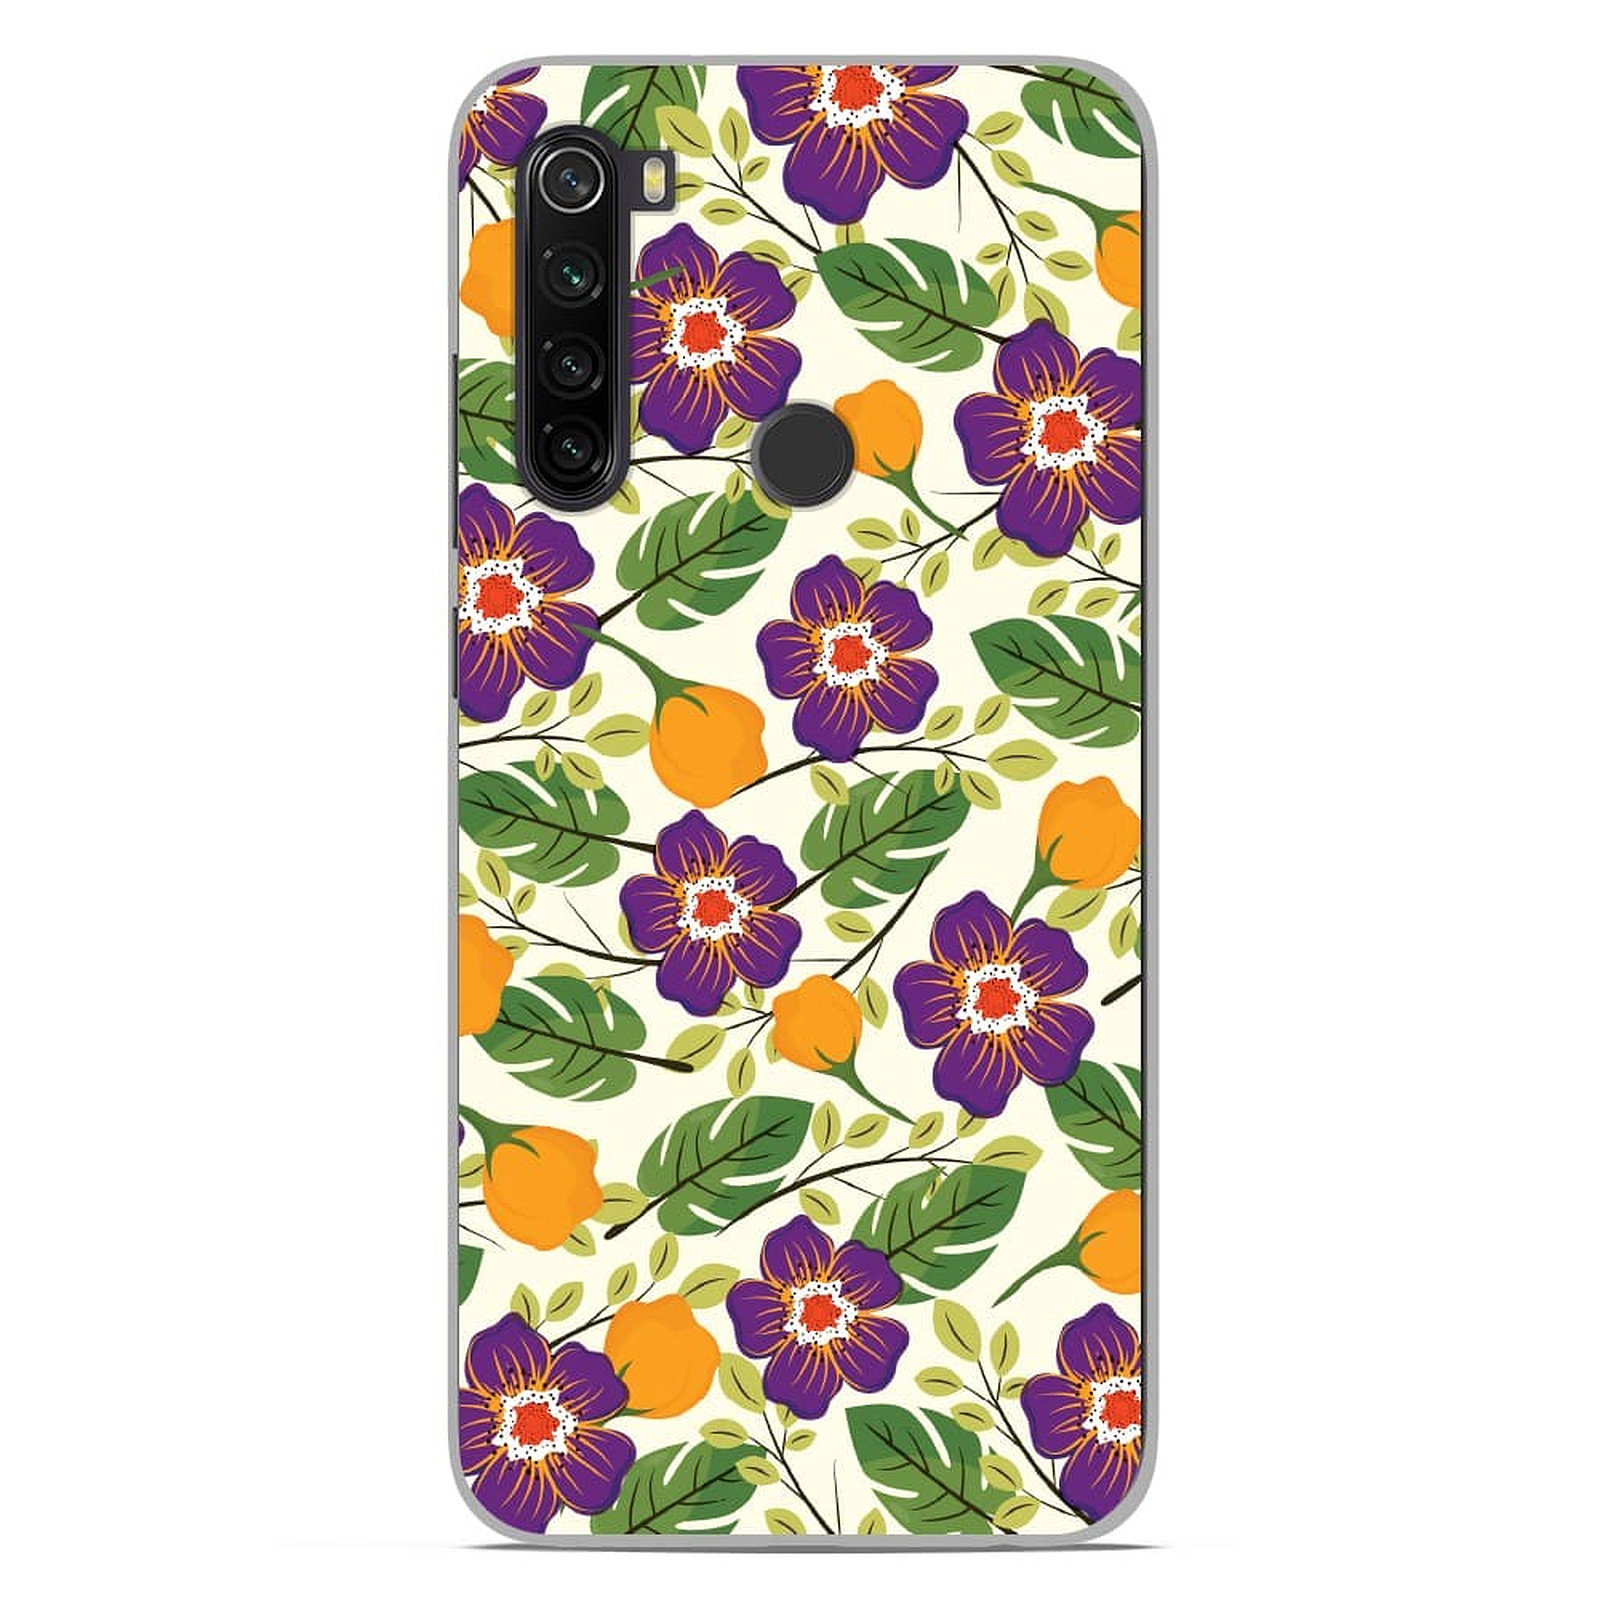 1001 Coques Coque silicone gel Xiaomi Redmi Note 8 motif Fleurs Violettes - Coque telephone 1001Coques